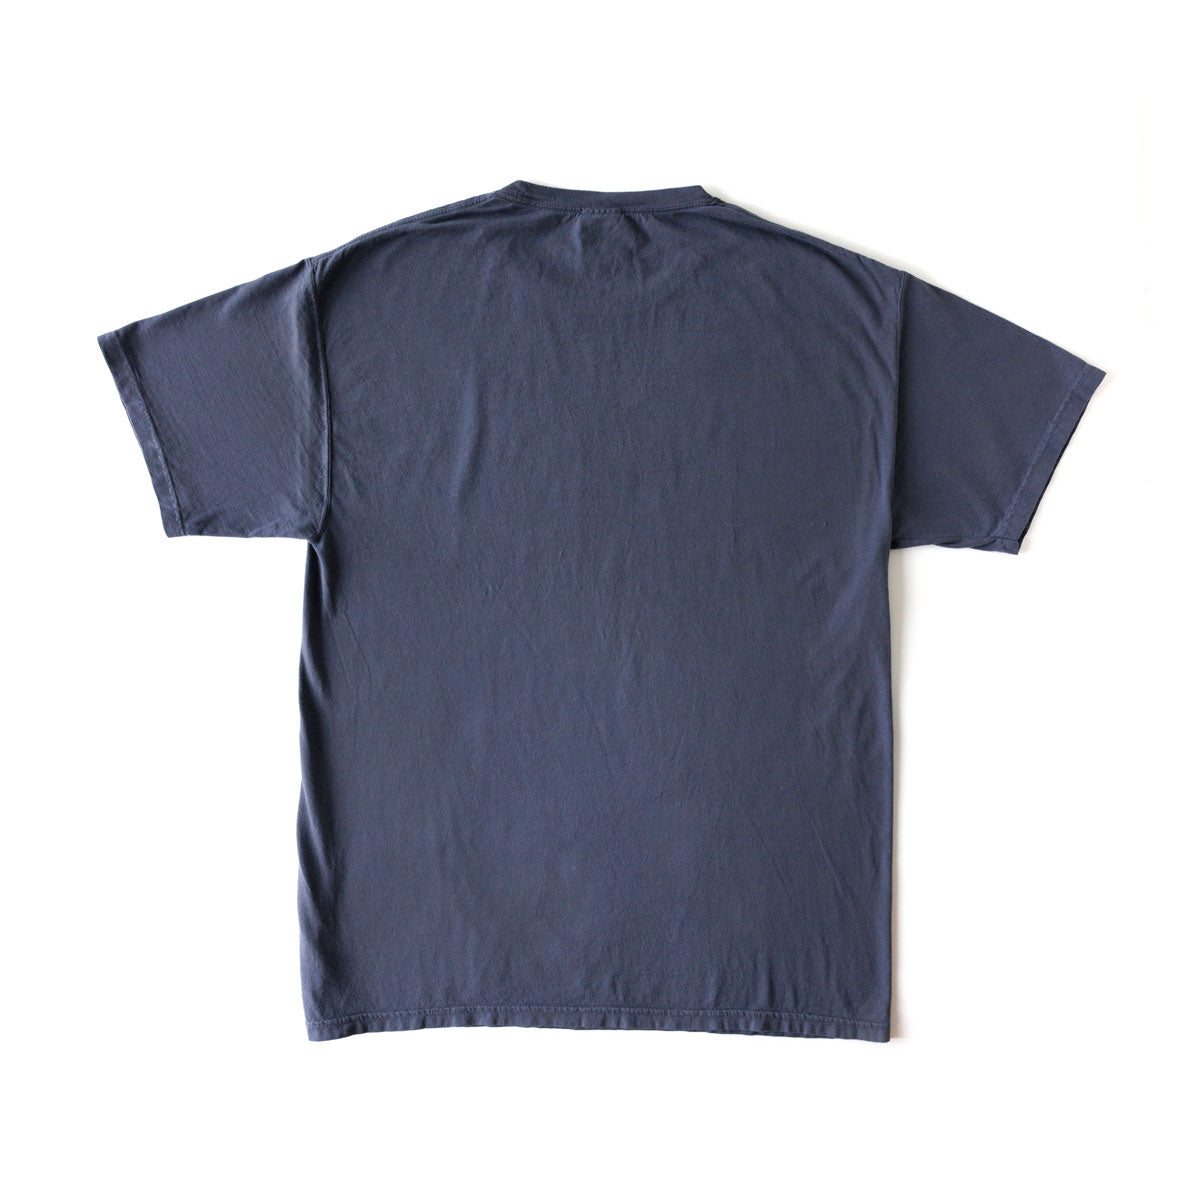 Back view of slate blue short-sleeved t-shirt